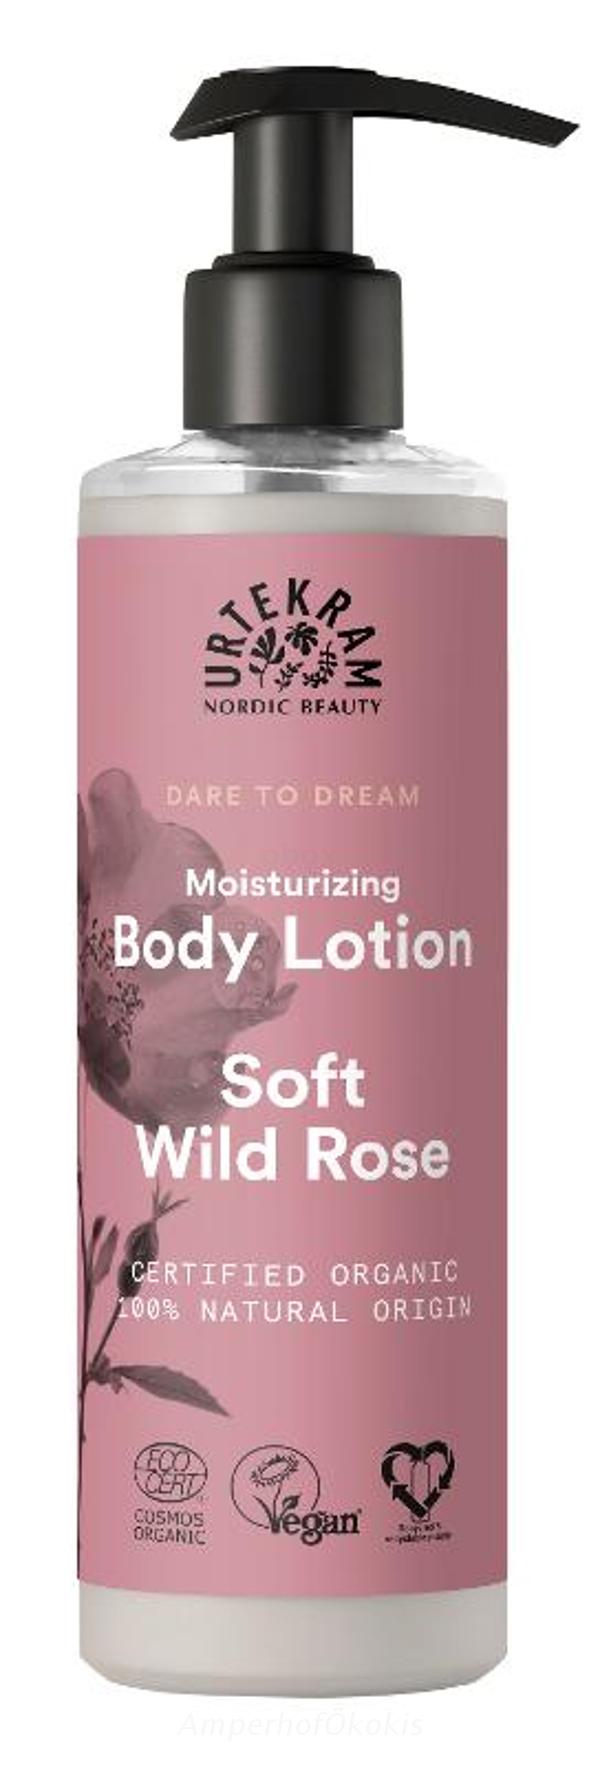 Produktfoto zu Body Lotion Soft Wild Rose 245 ml